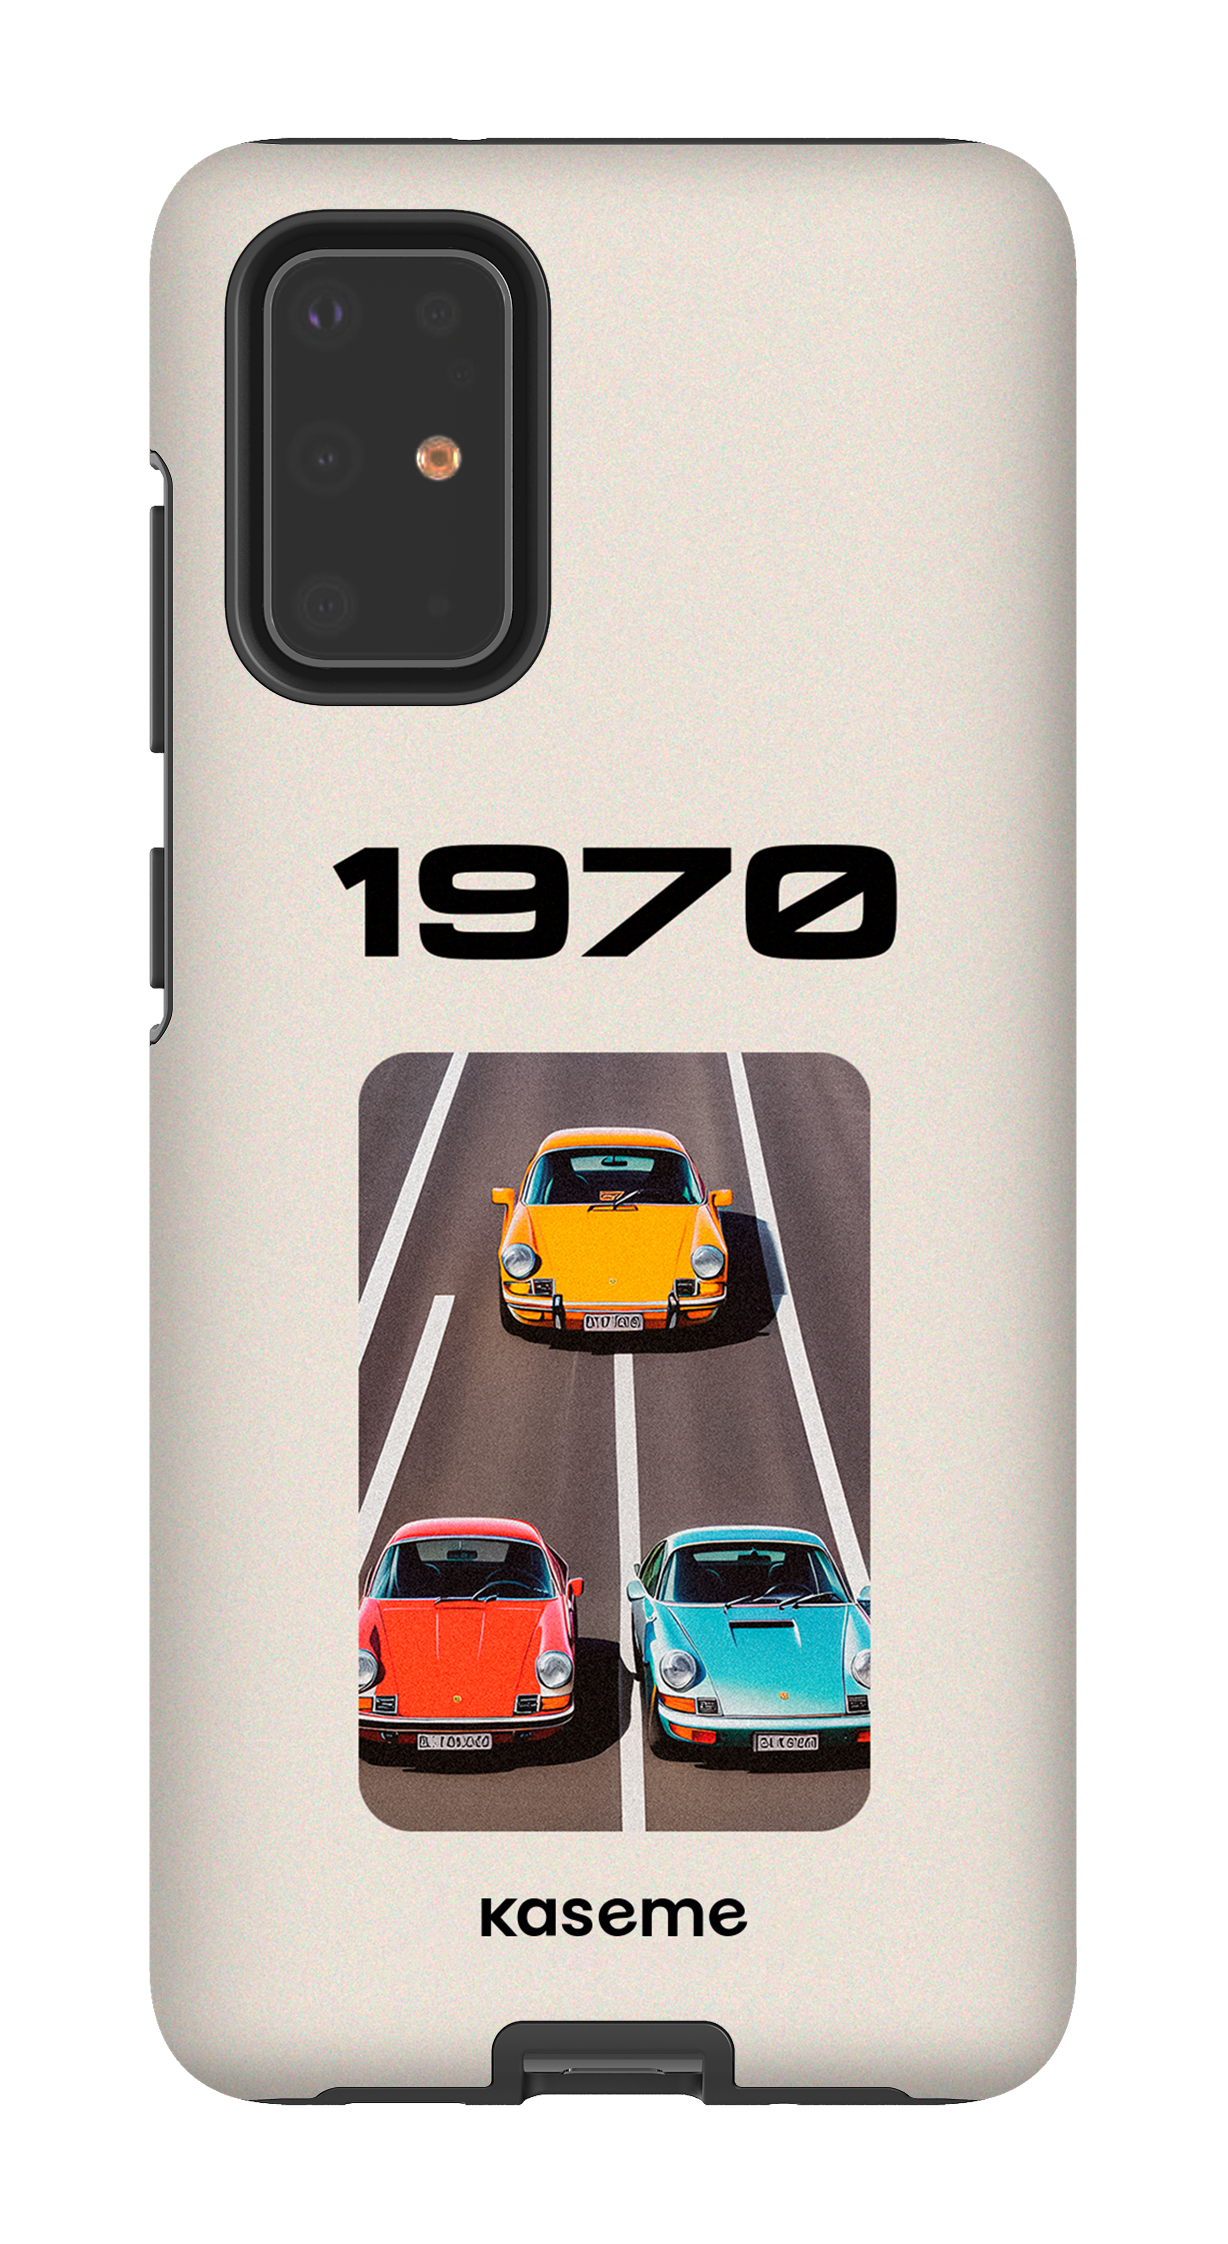 The 1970 - Galaxy S20 Plus